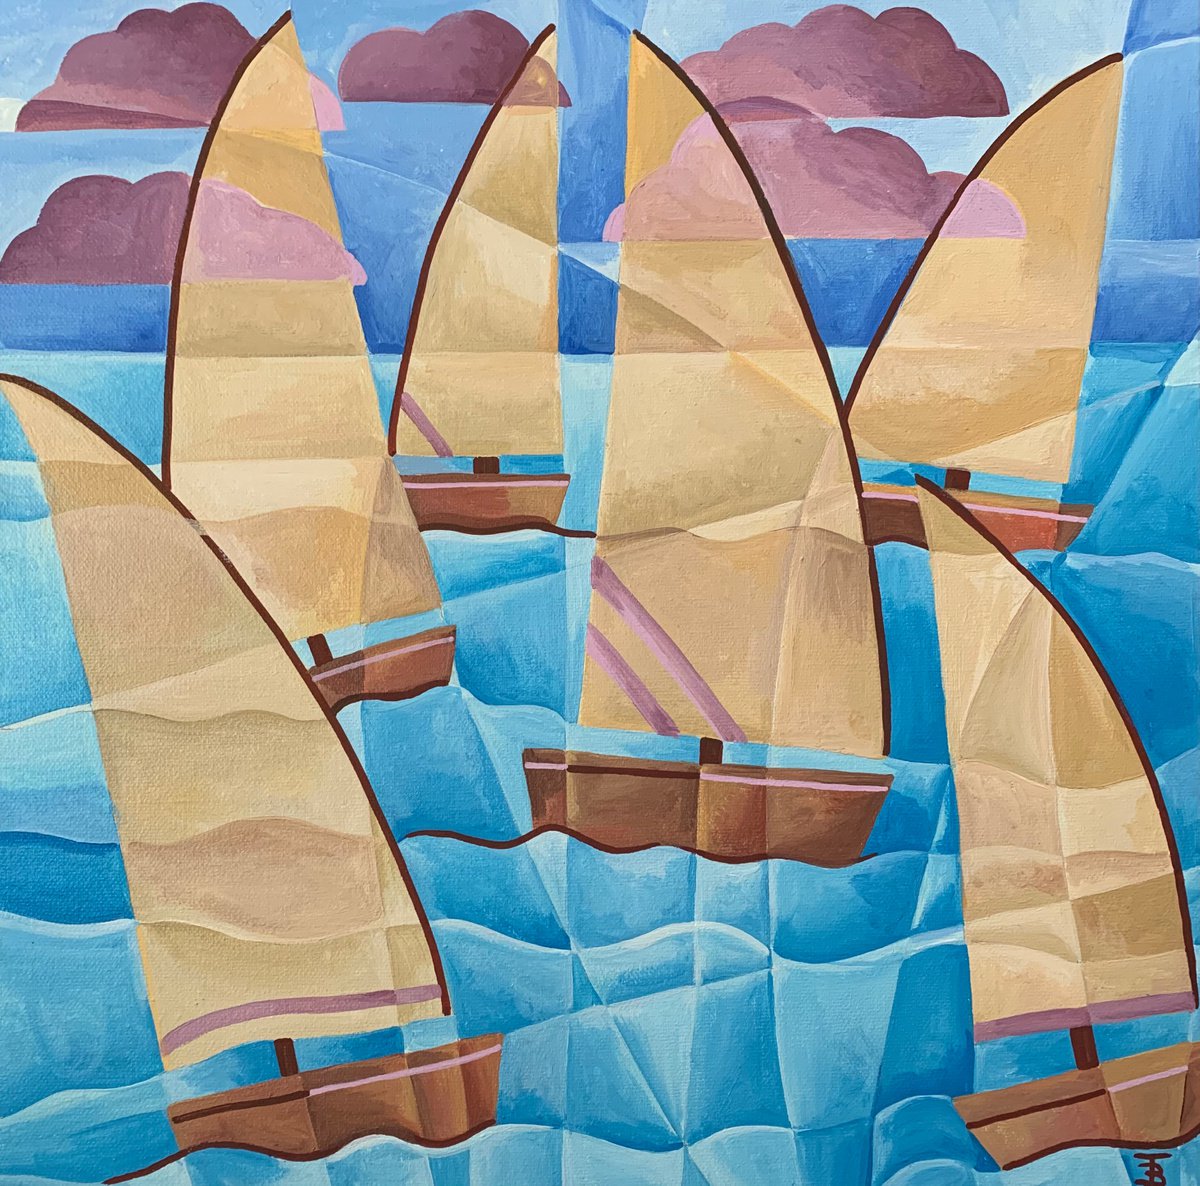 The Boats by Tiffany Budd